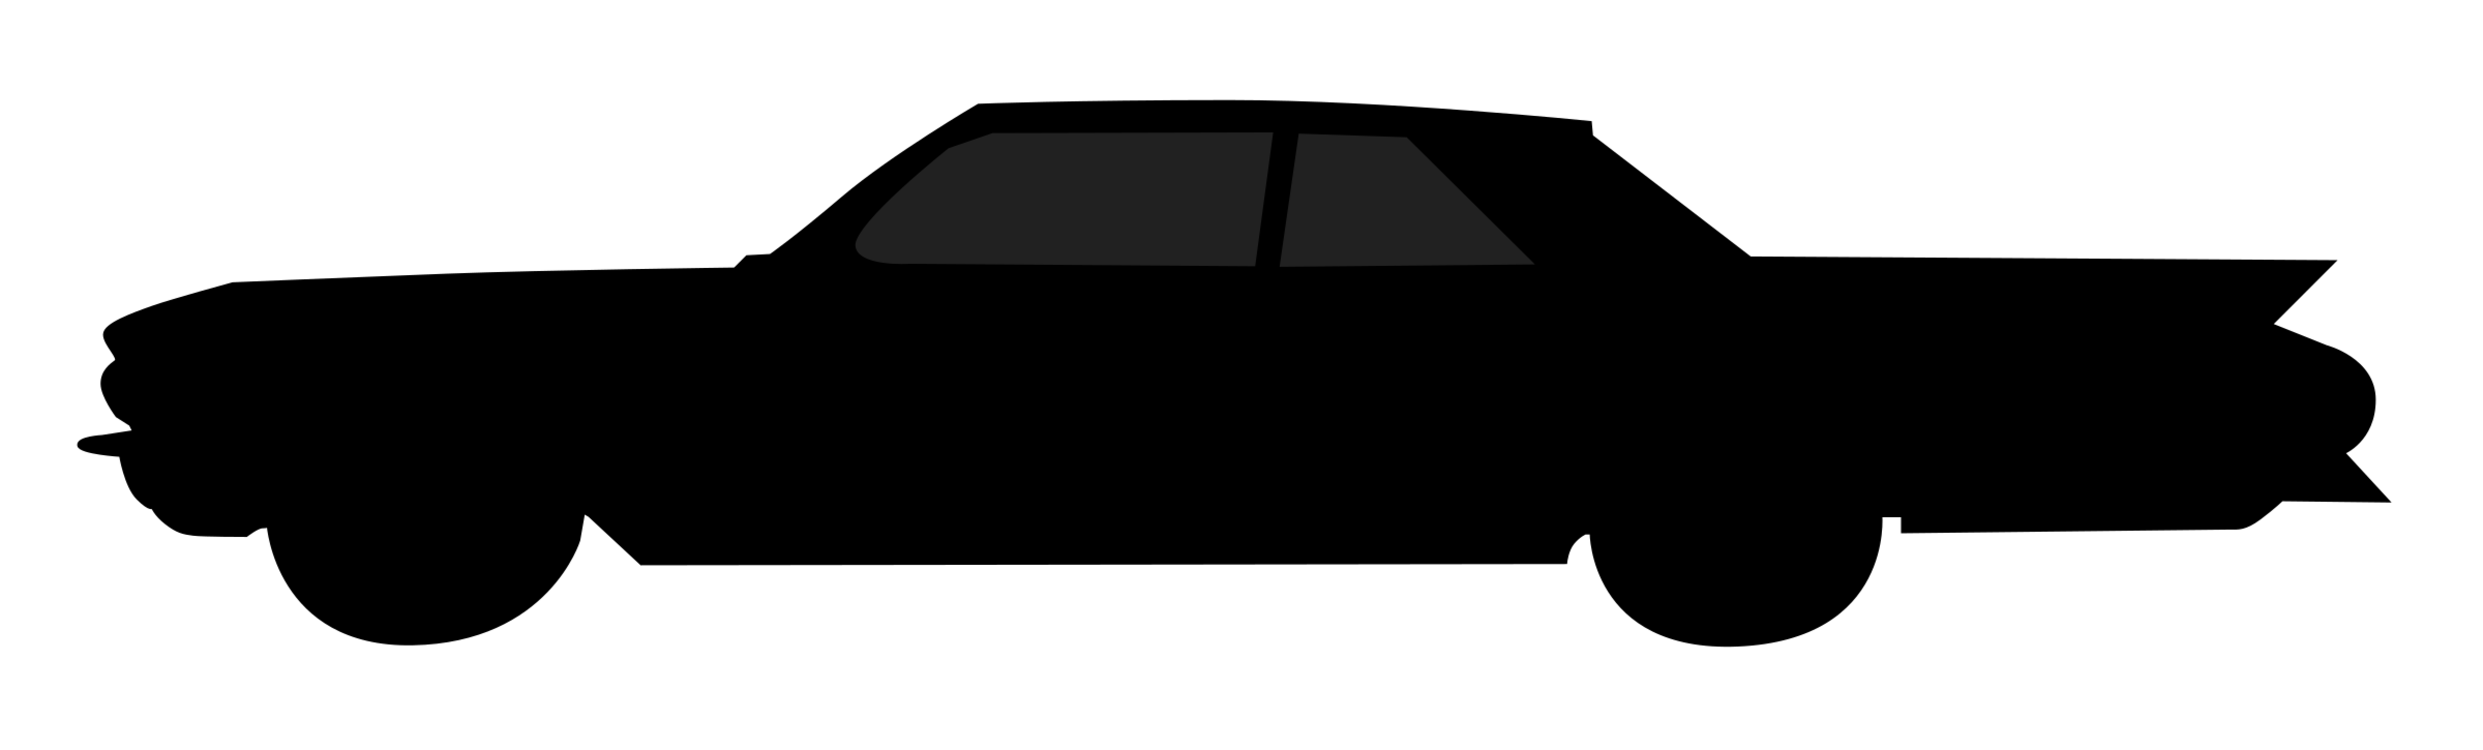 mustang car silhouette clip art